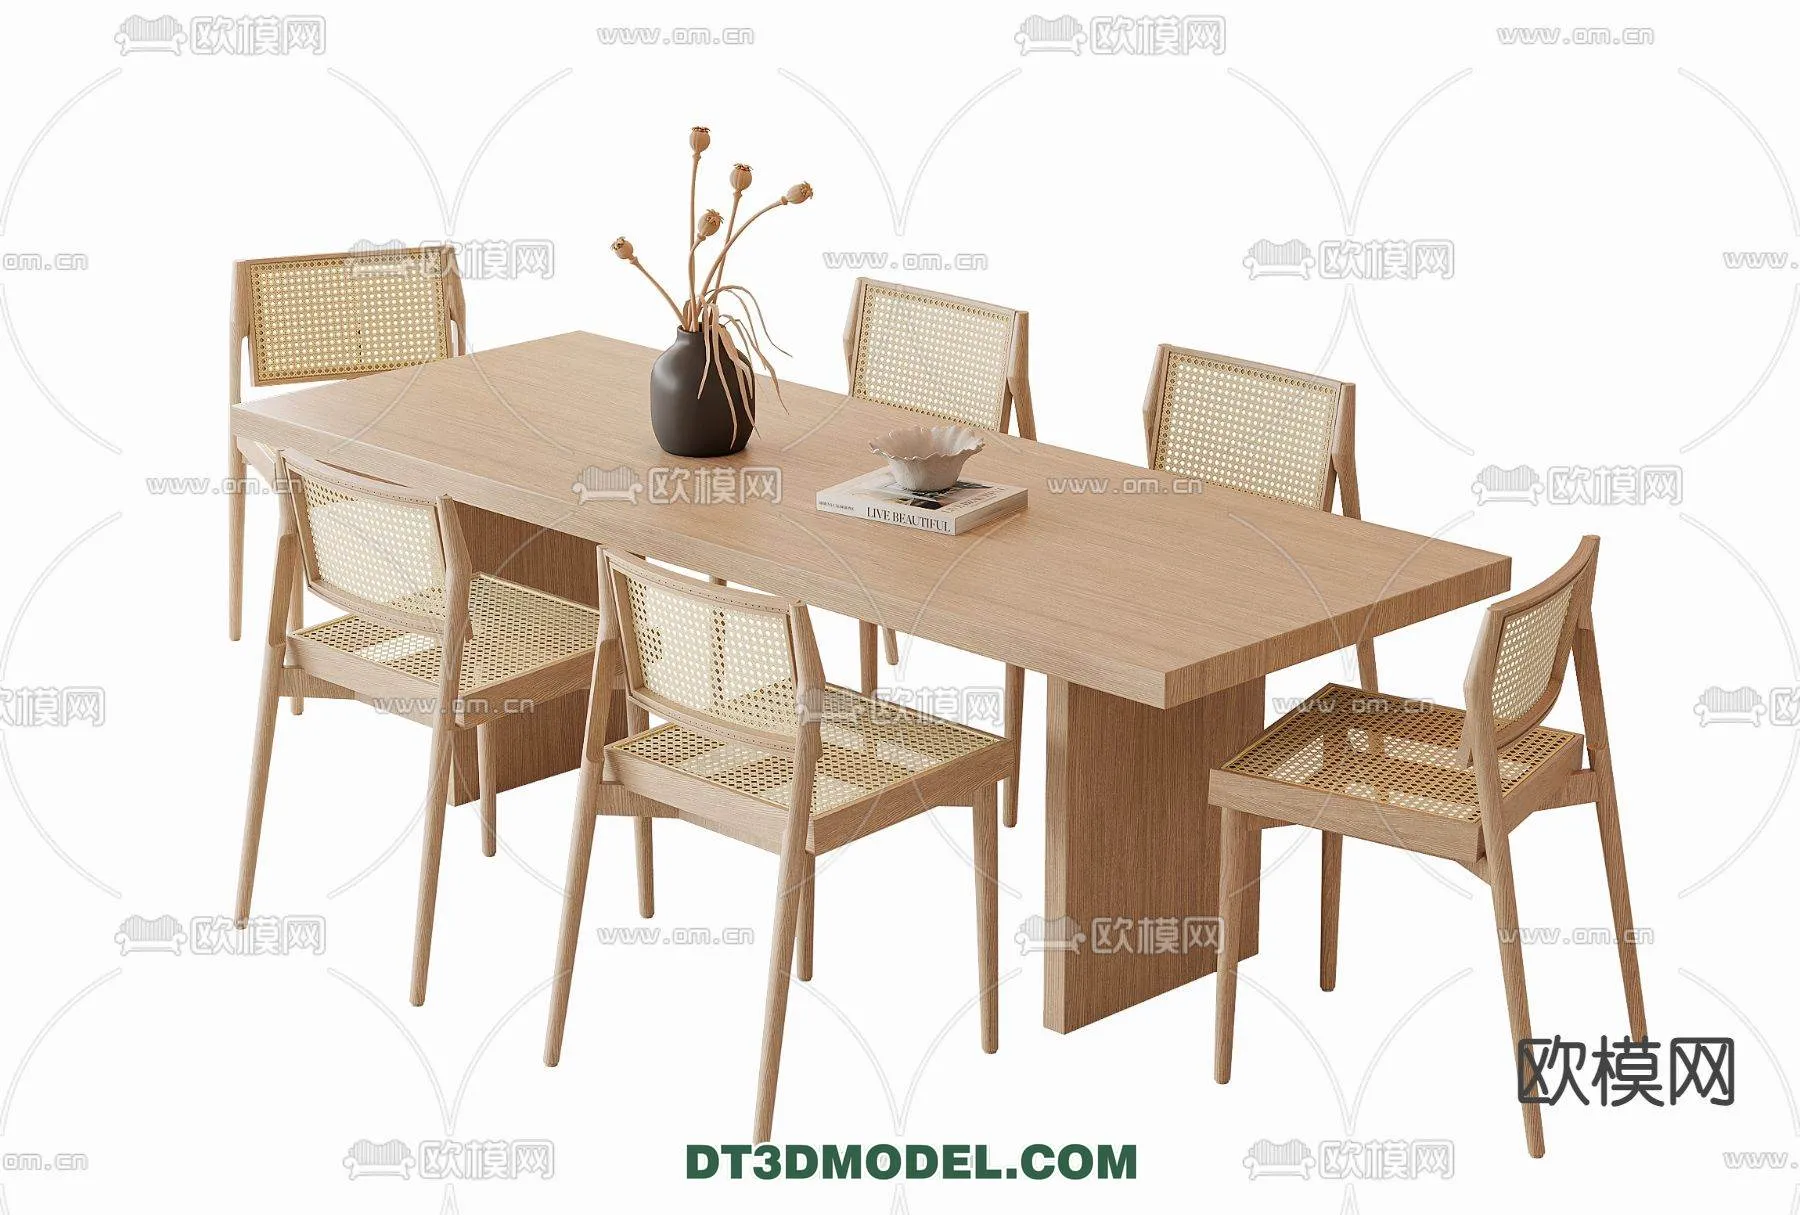 WABI SABI STYLE 3D MODELS – DINING TABLE – 0066